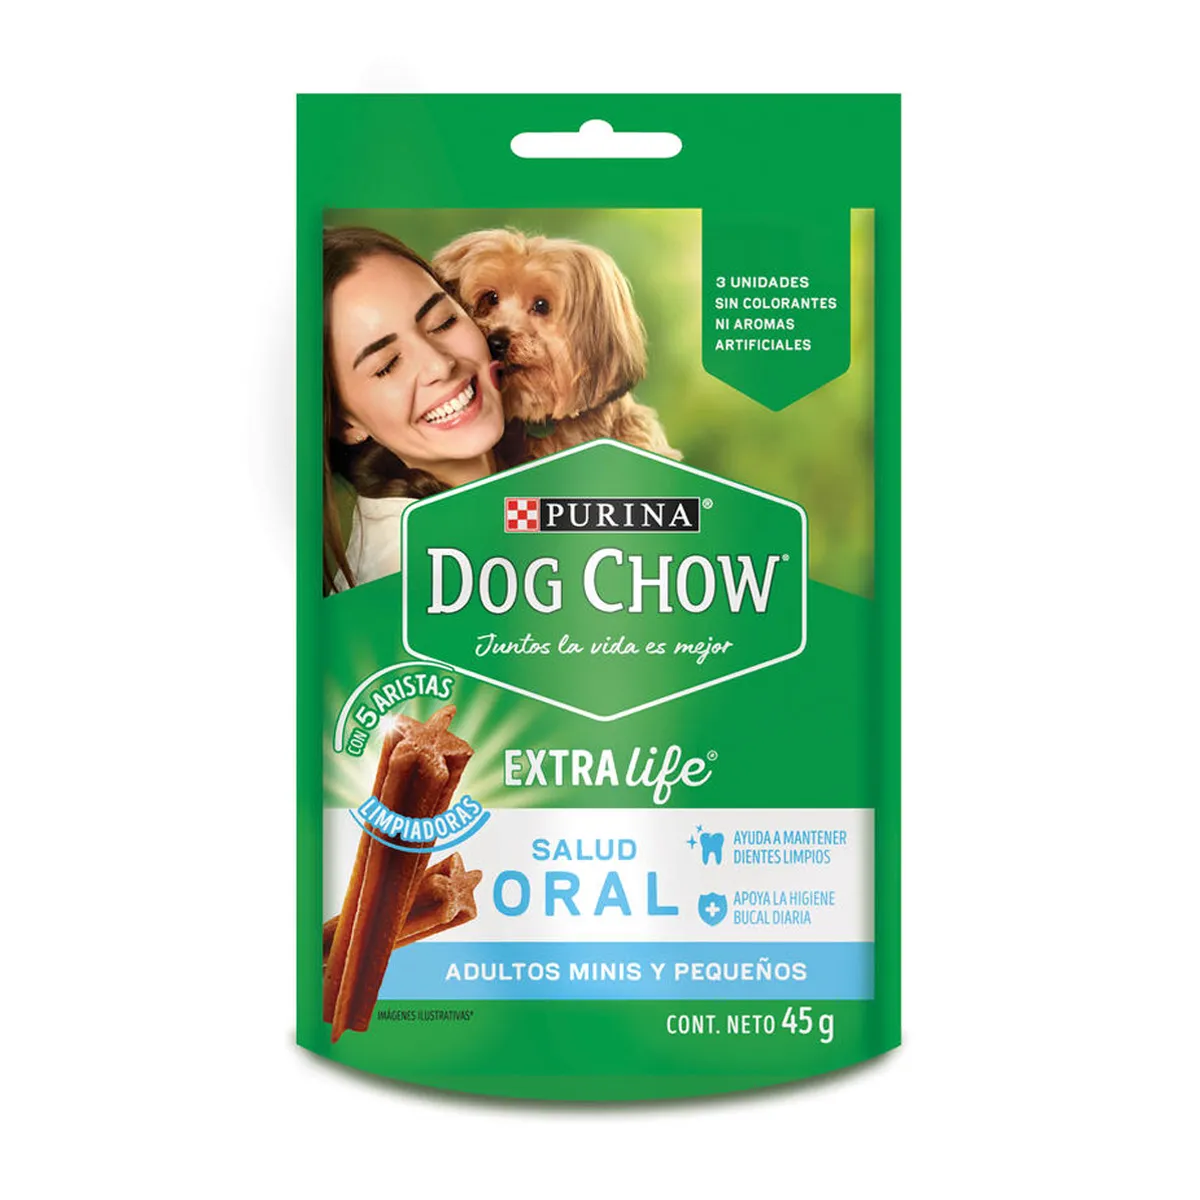 purina-dog-chow-salud-oral-adultos-minis-y-pequenos.jpg